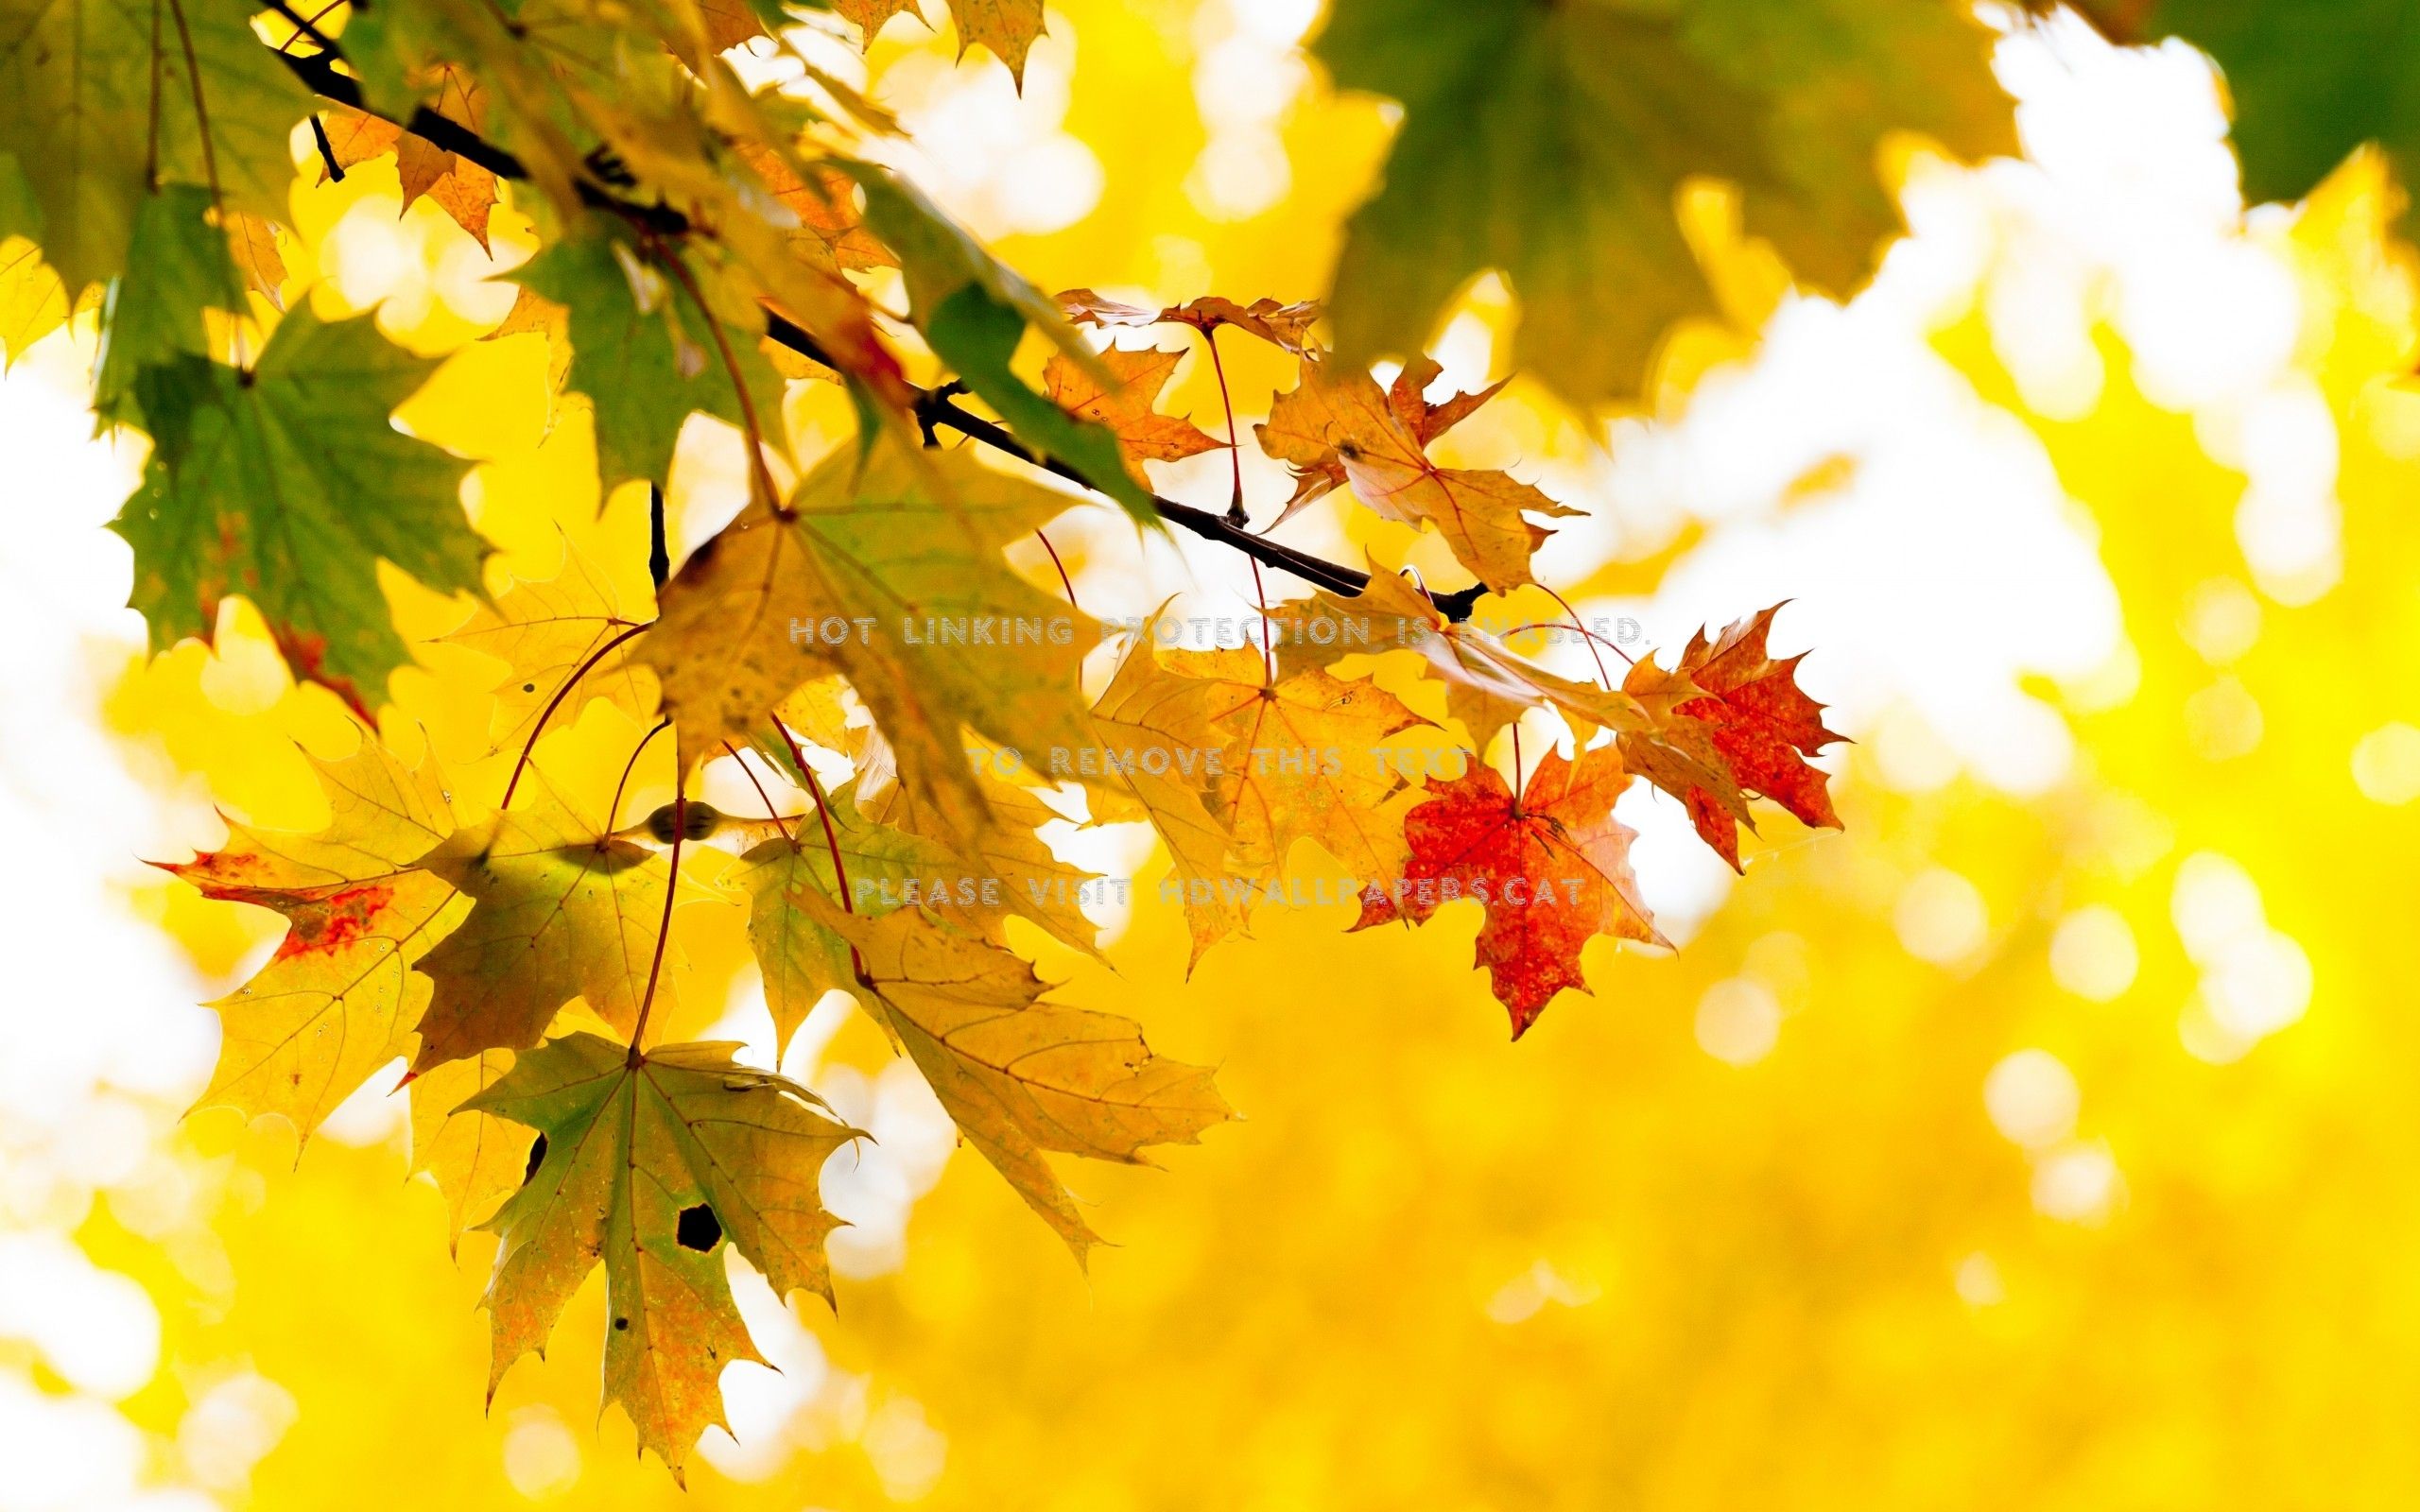 golden autumn sunshine faliage scenery